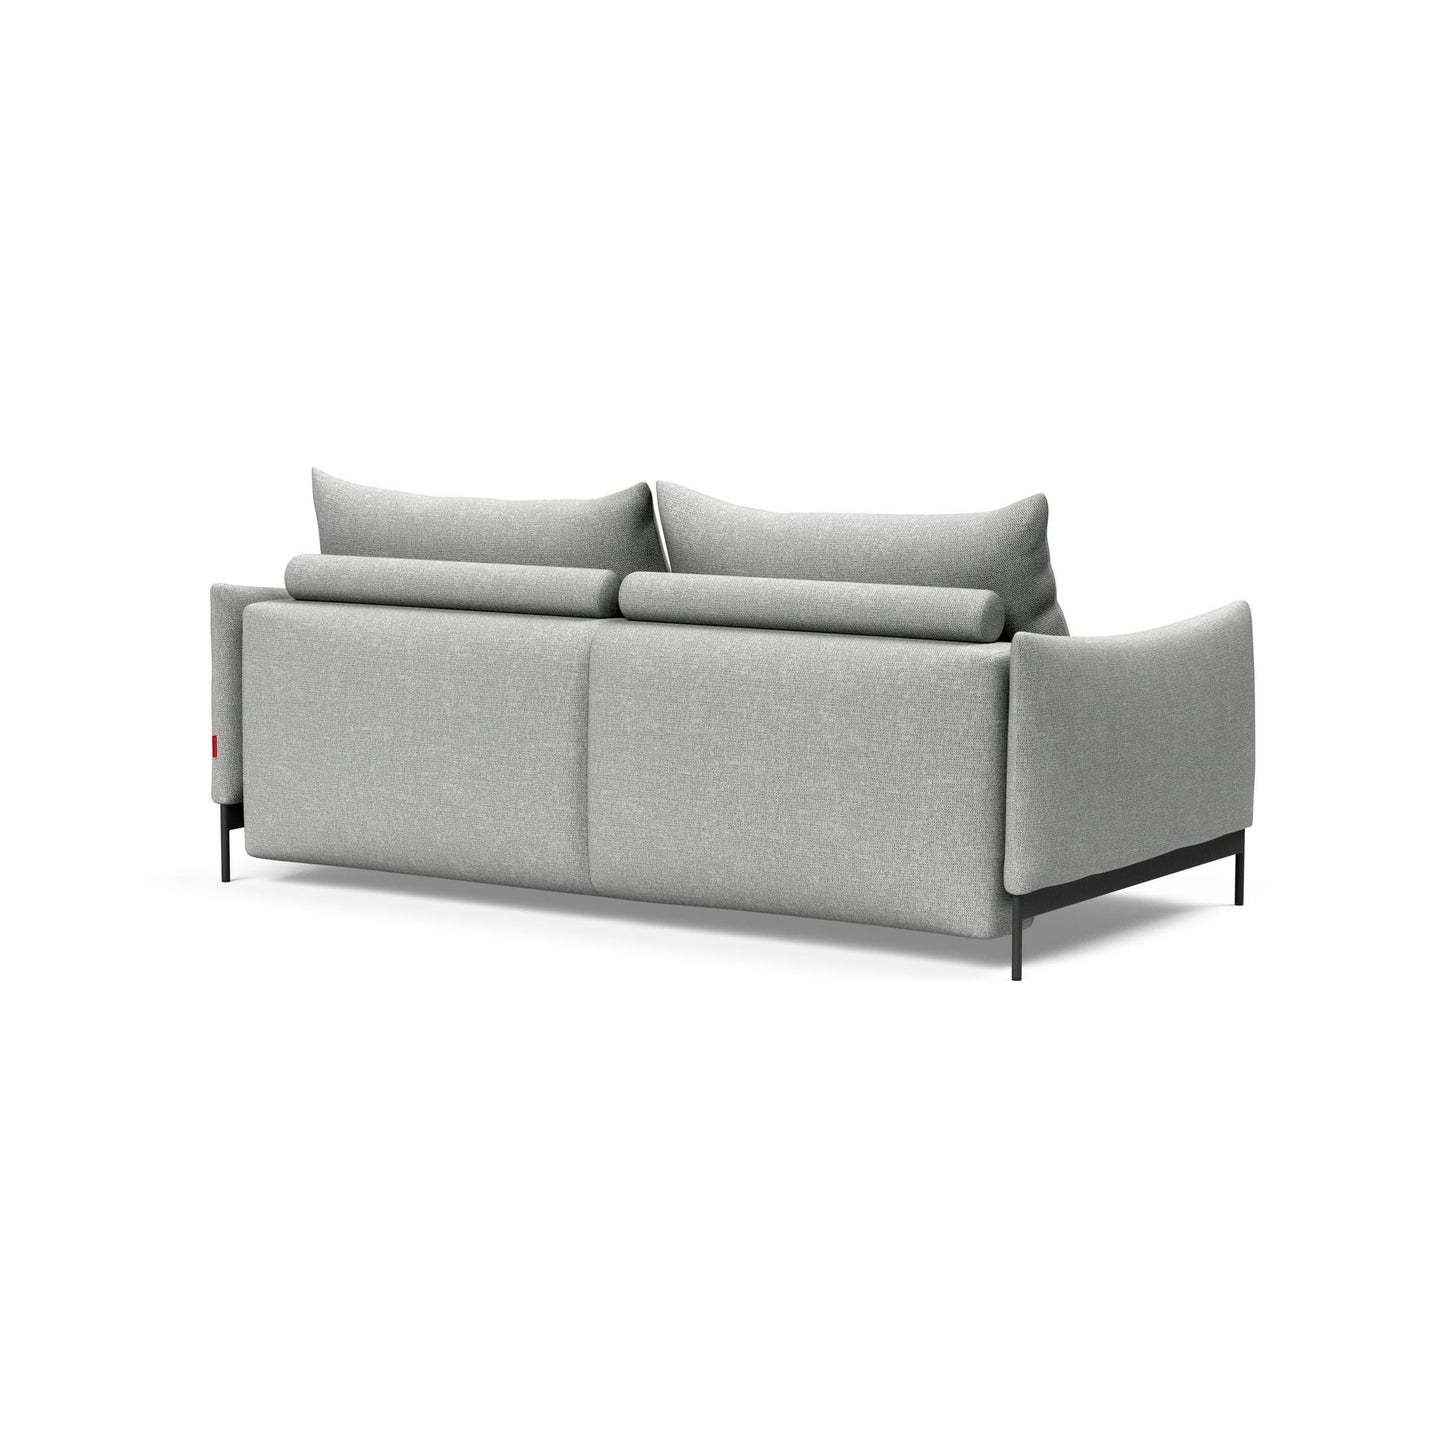 Malloy Sofa Bed in Micro Check Light Gray